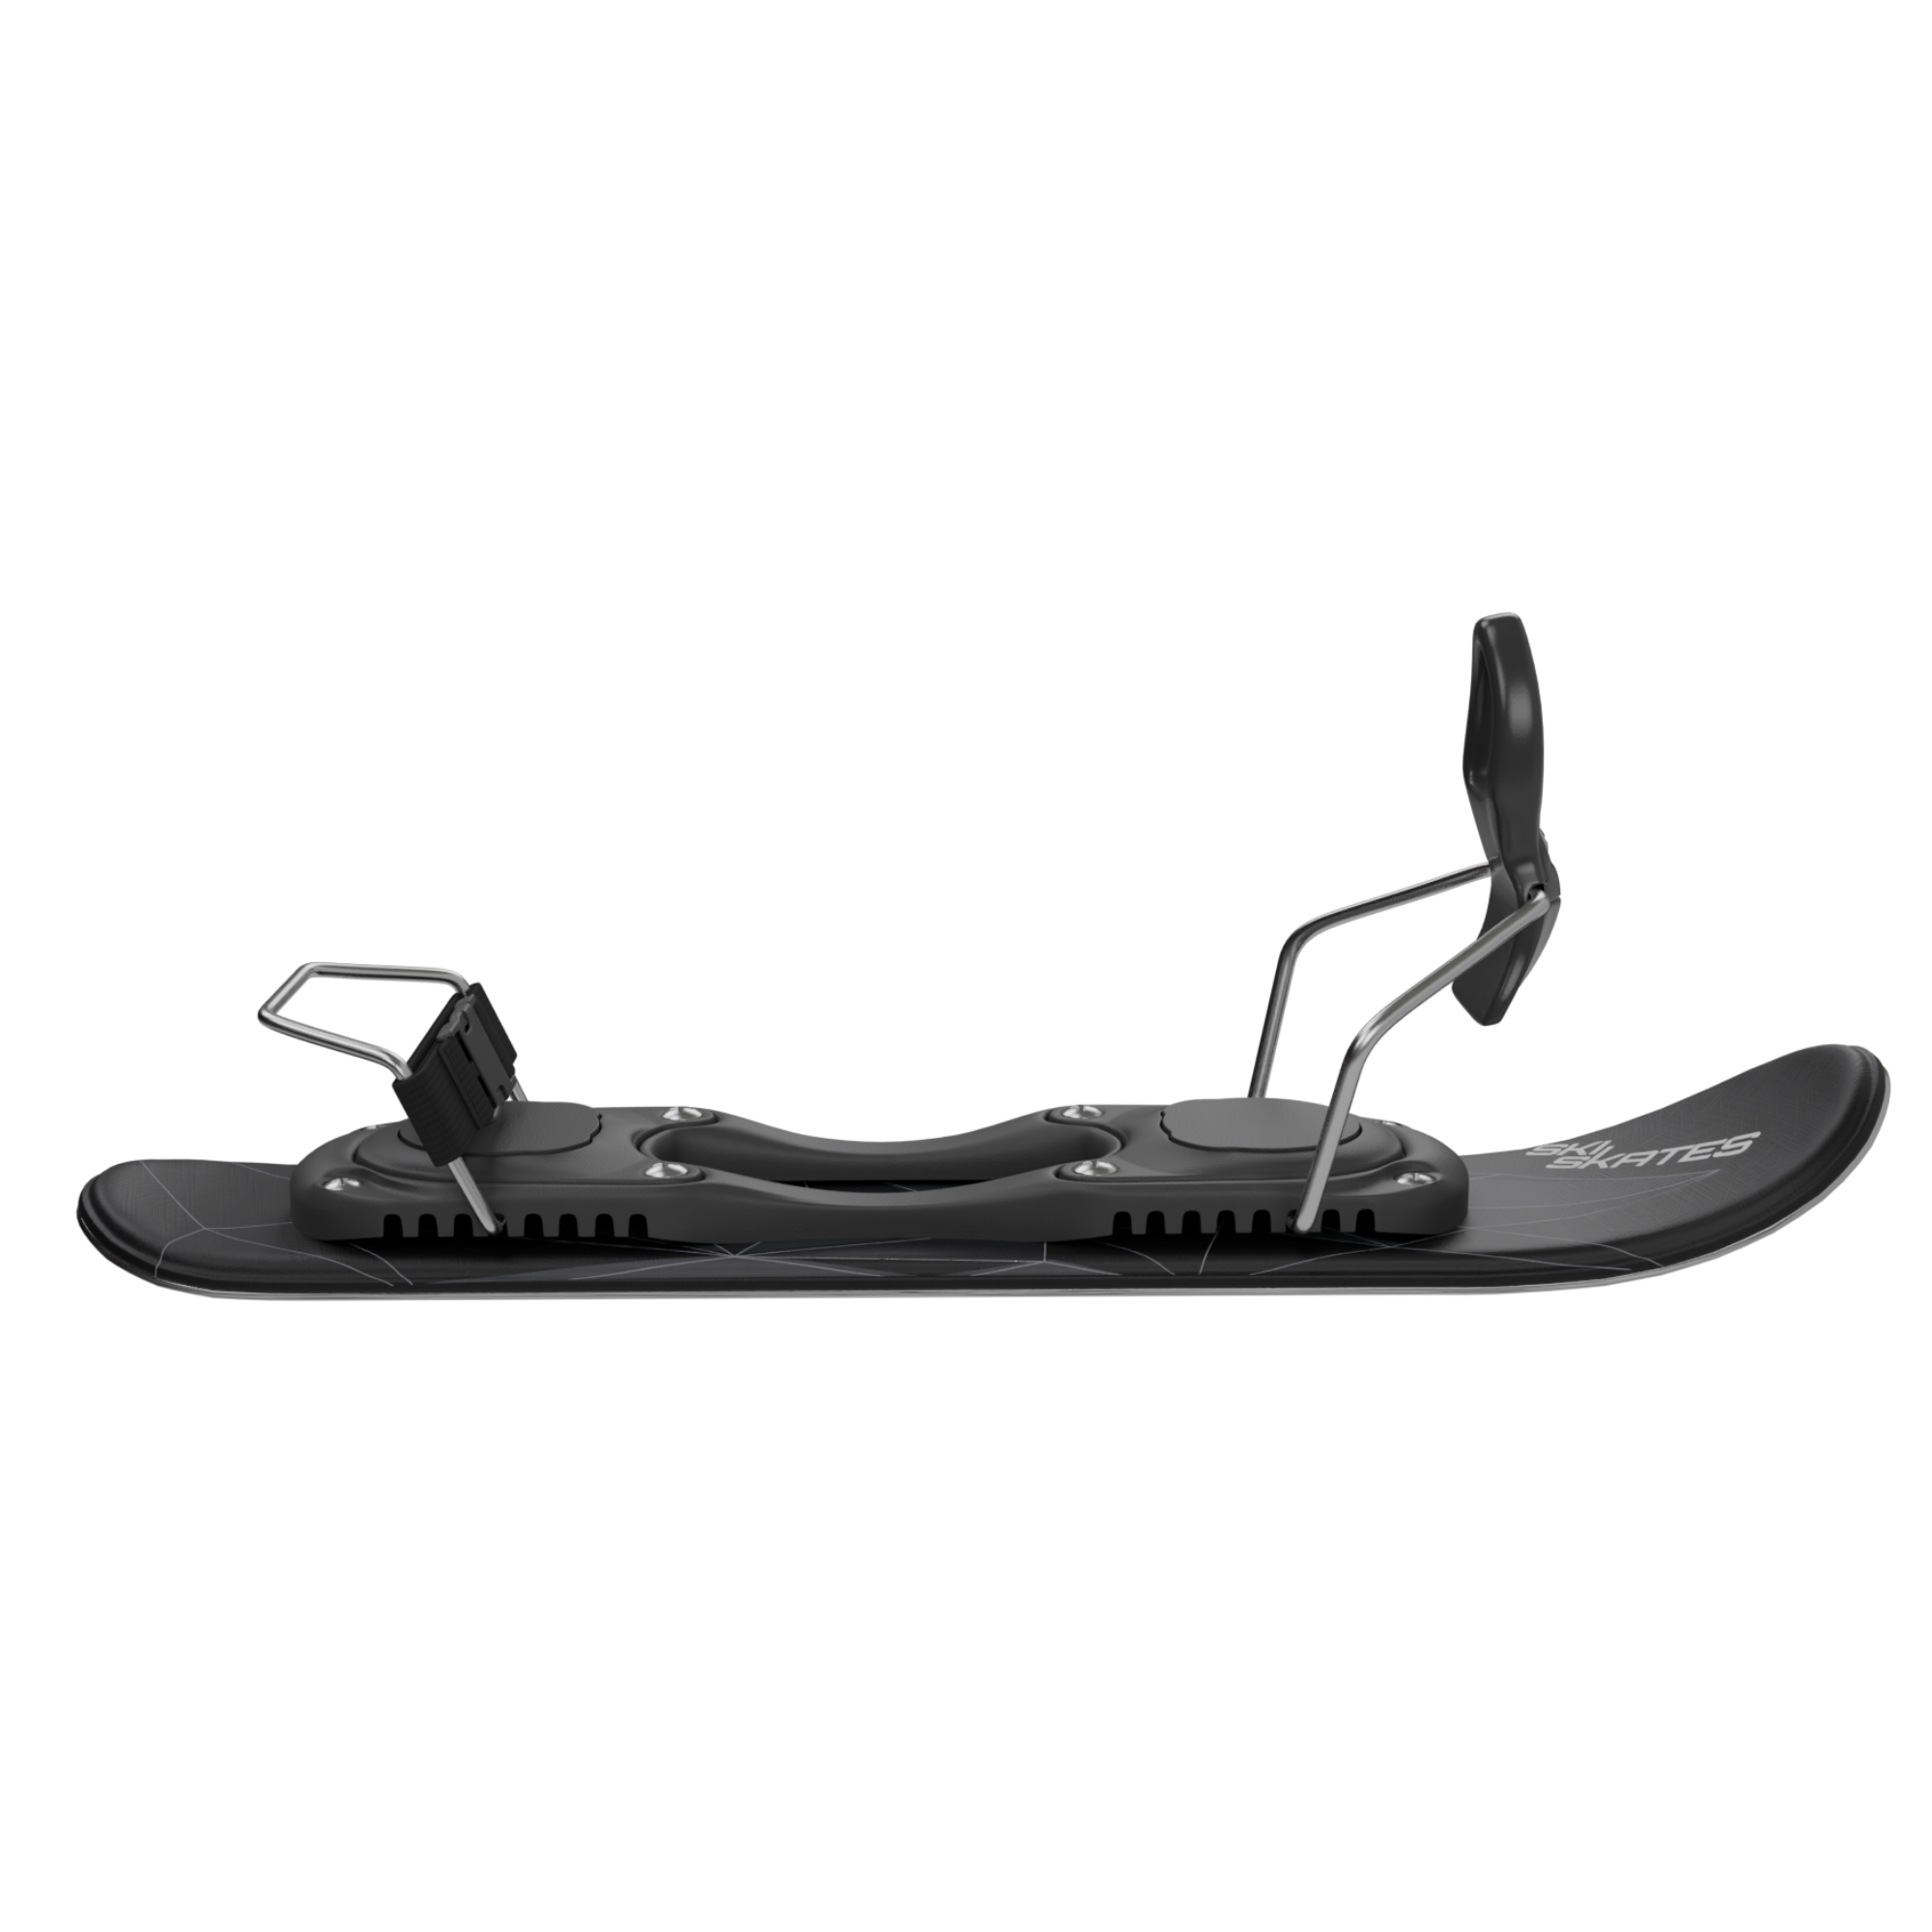 Skiskates - Mini Ski Skates  Snowboard Boots Model - Official Product